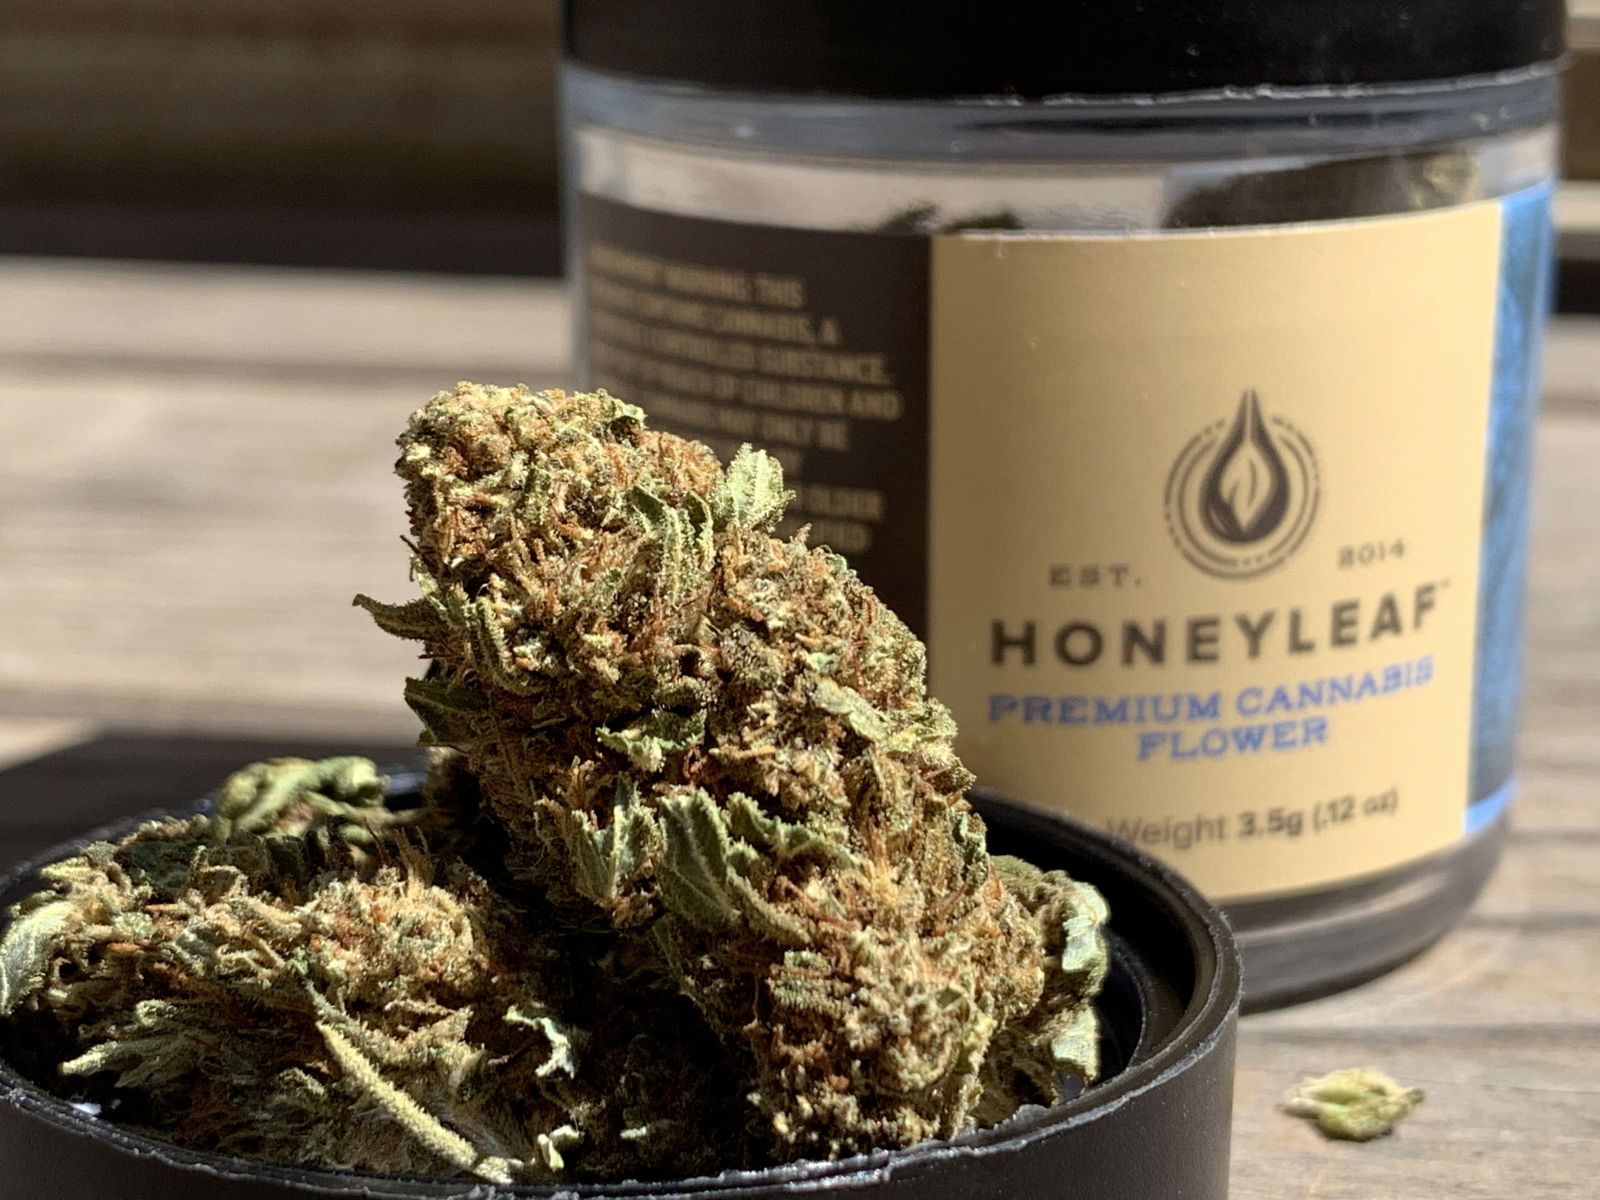 Honeyleaf blackberry fire packaged eighth